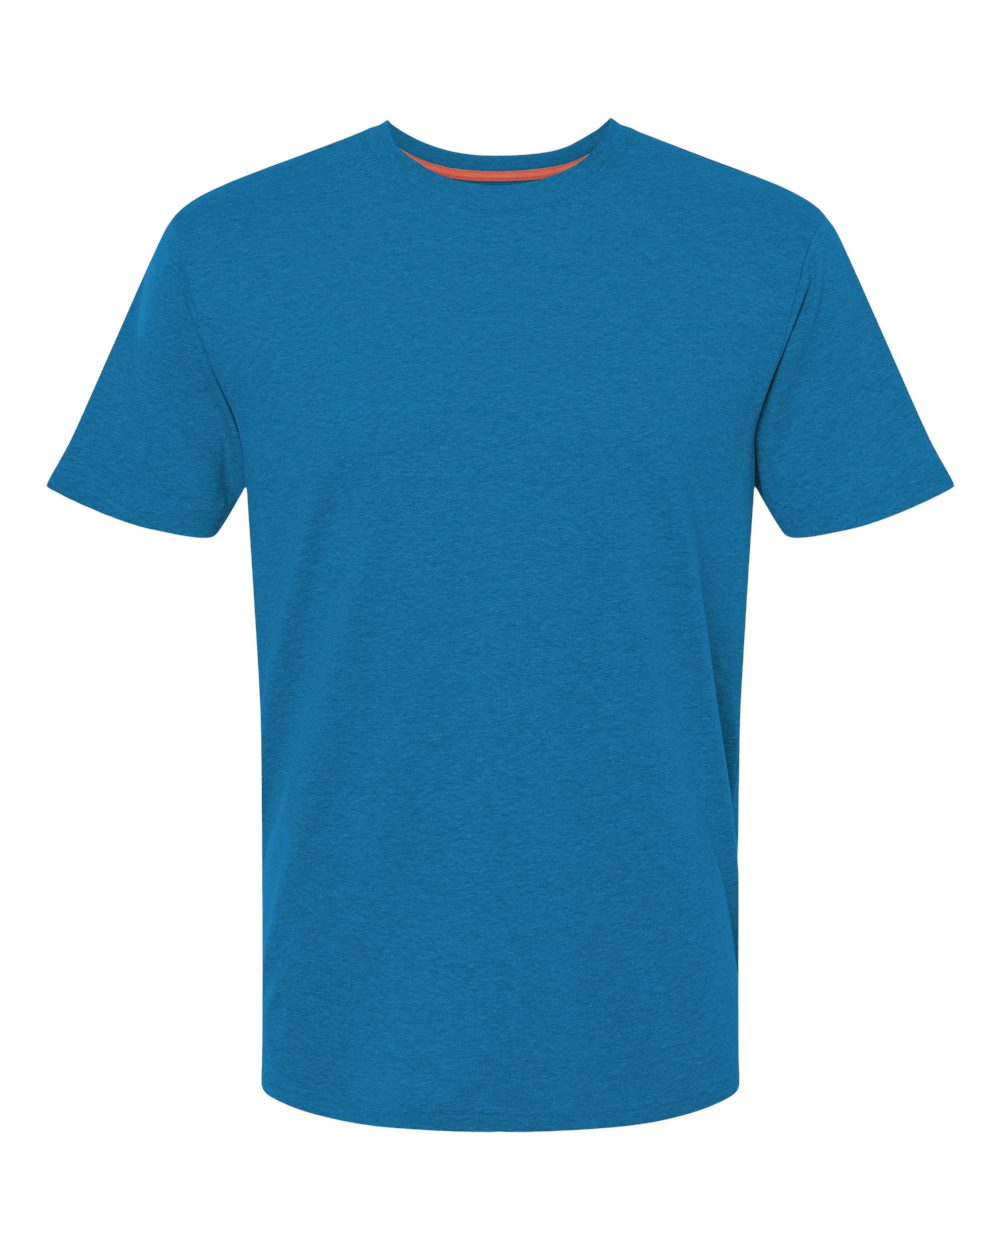 Customizable kastlfel recycledsoft t-shirt Breaker Blue